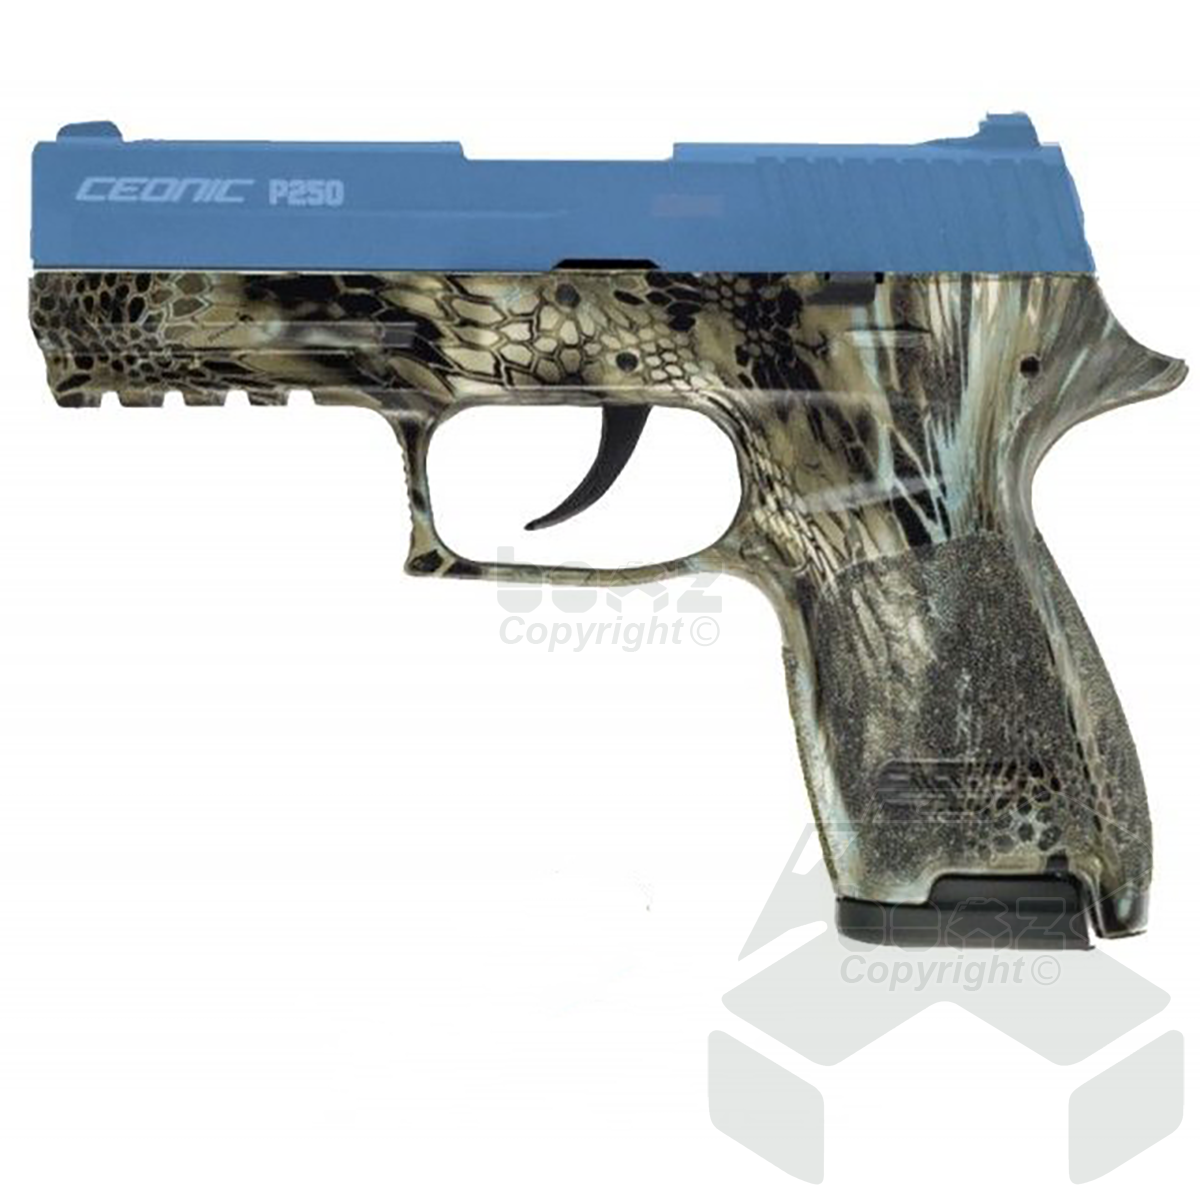 Ceonic P250 Blank Firing Pistol - 9mm - Blue Cobra